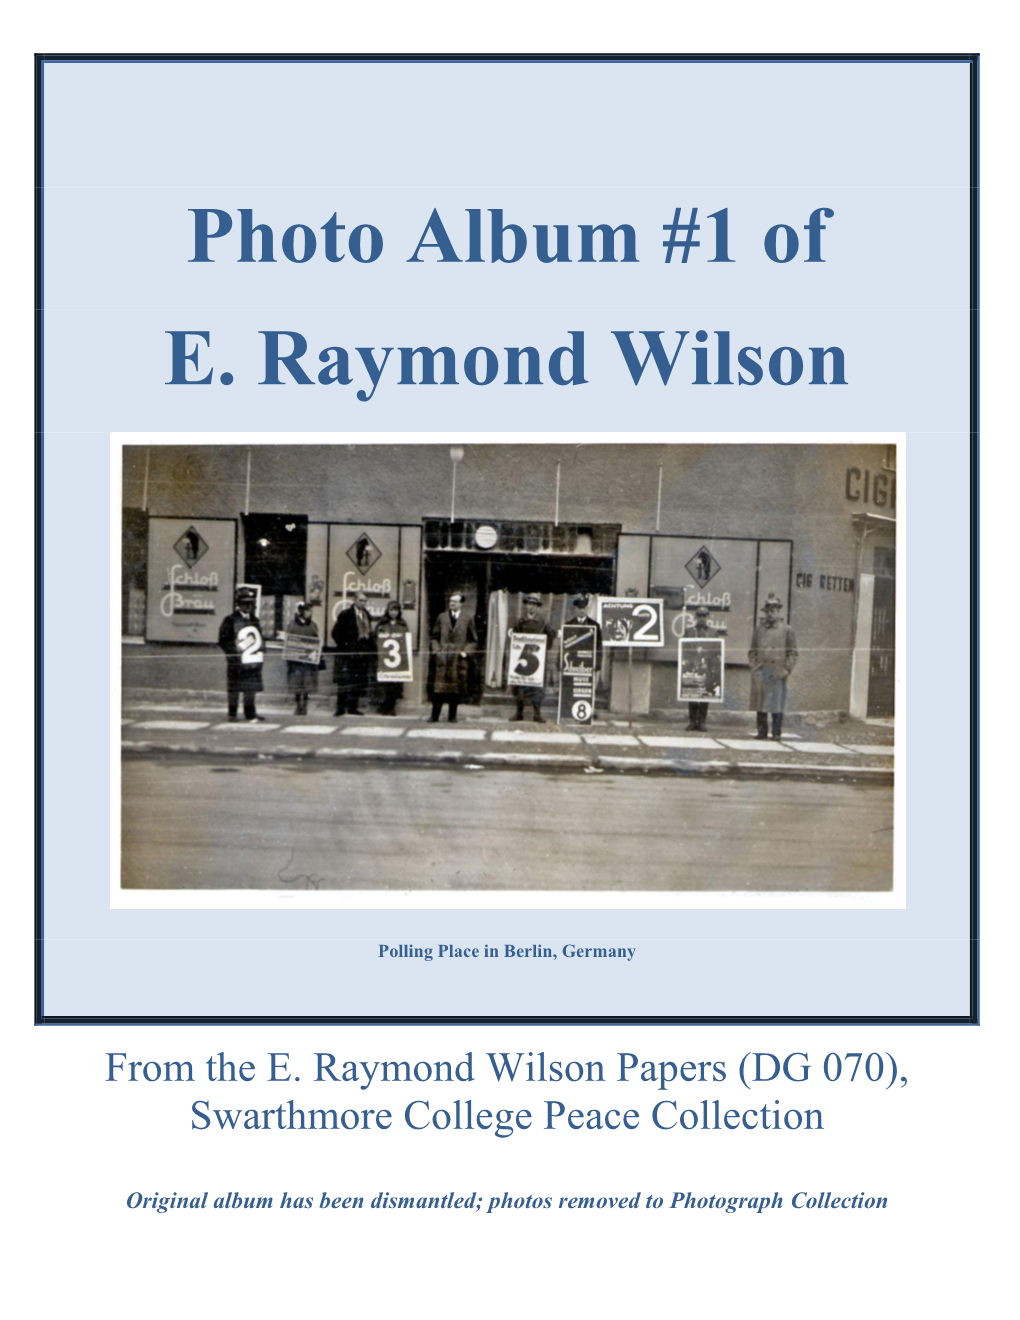 Photo Album #1 of E. Raymond Wilson